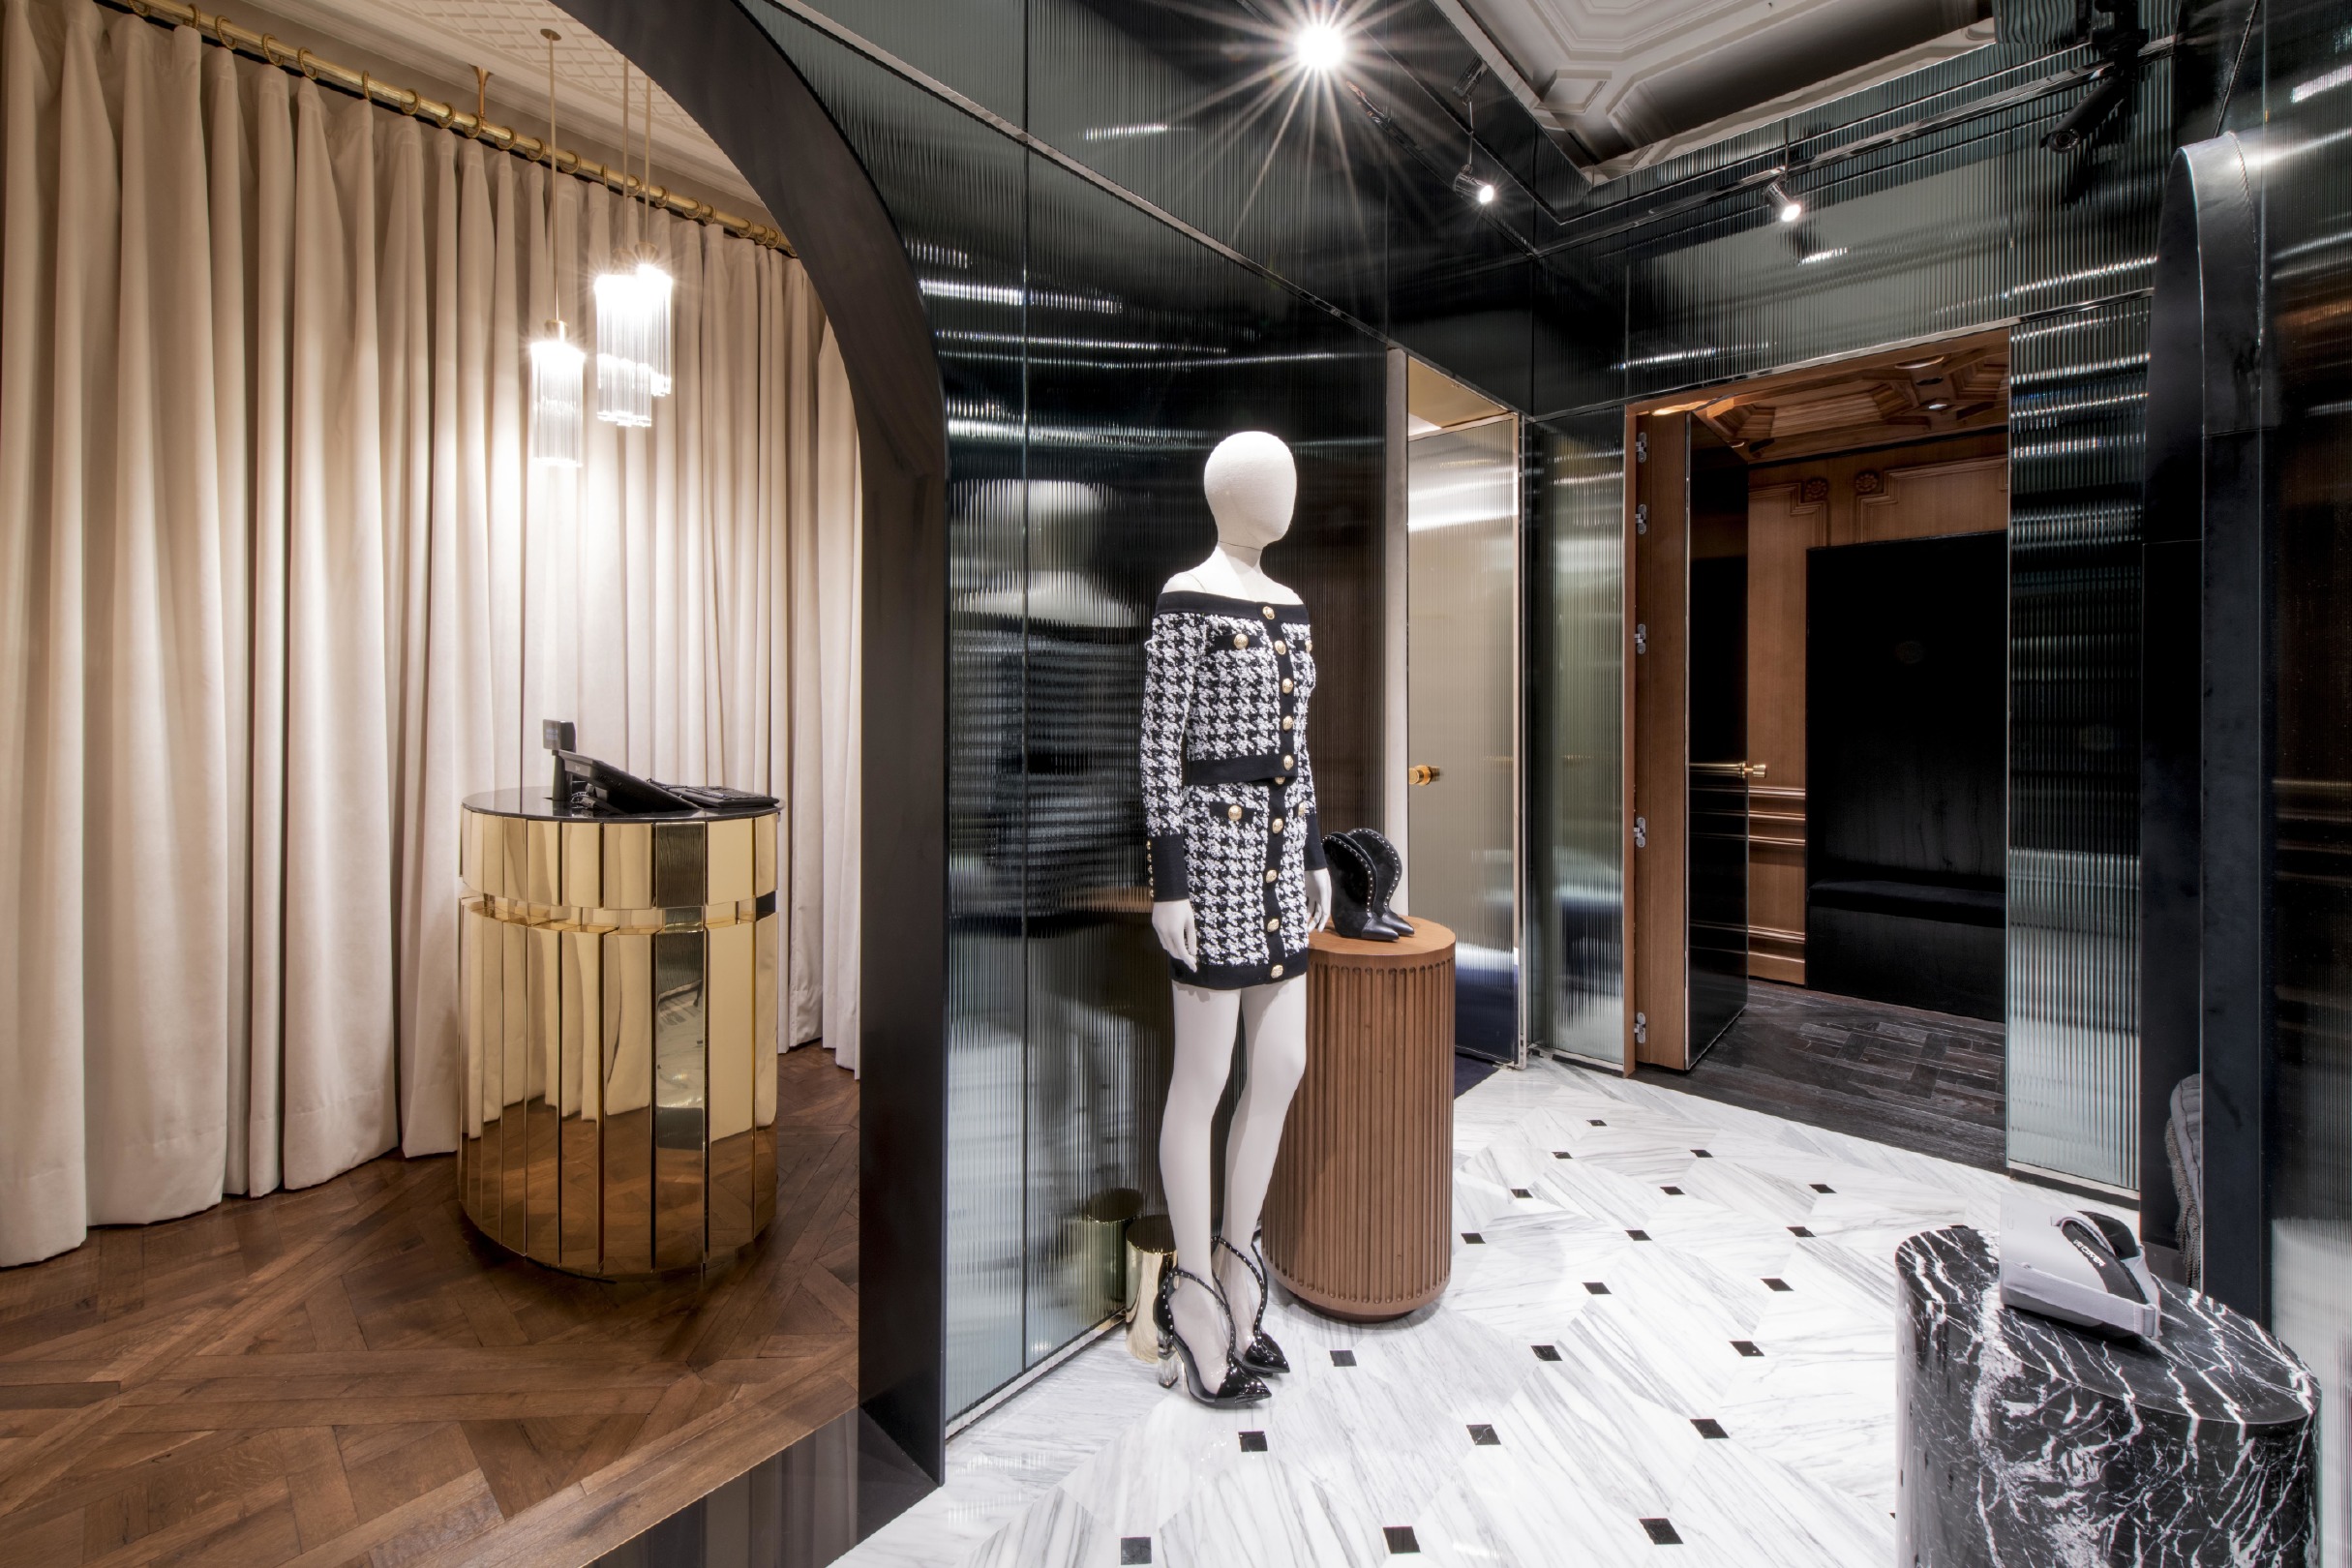 Louis Vuitton in Zorlu Center Istanbul